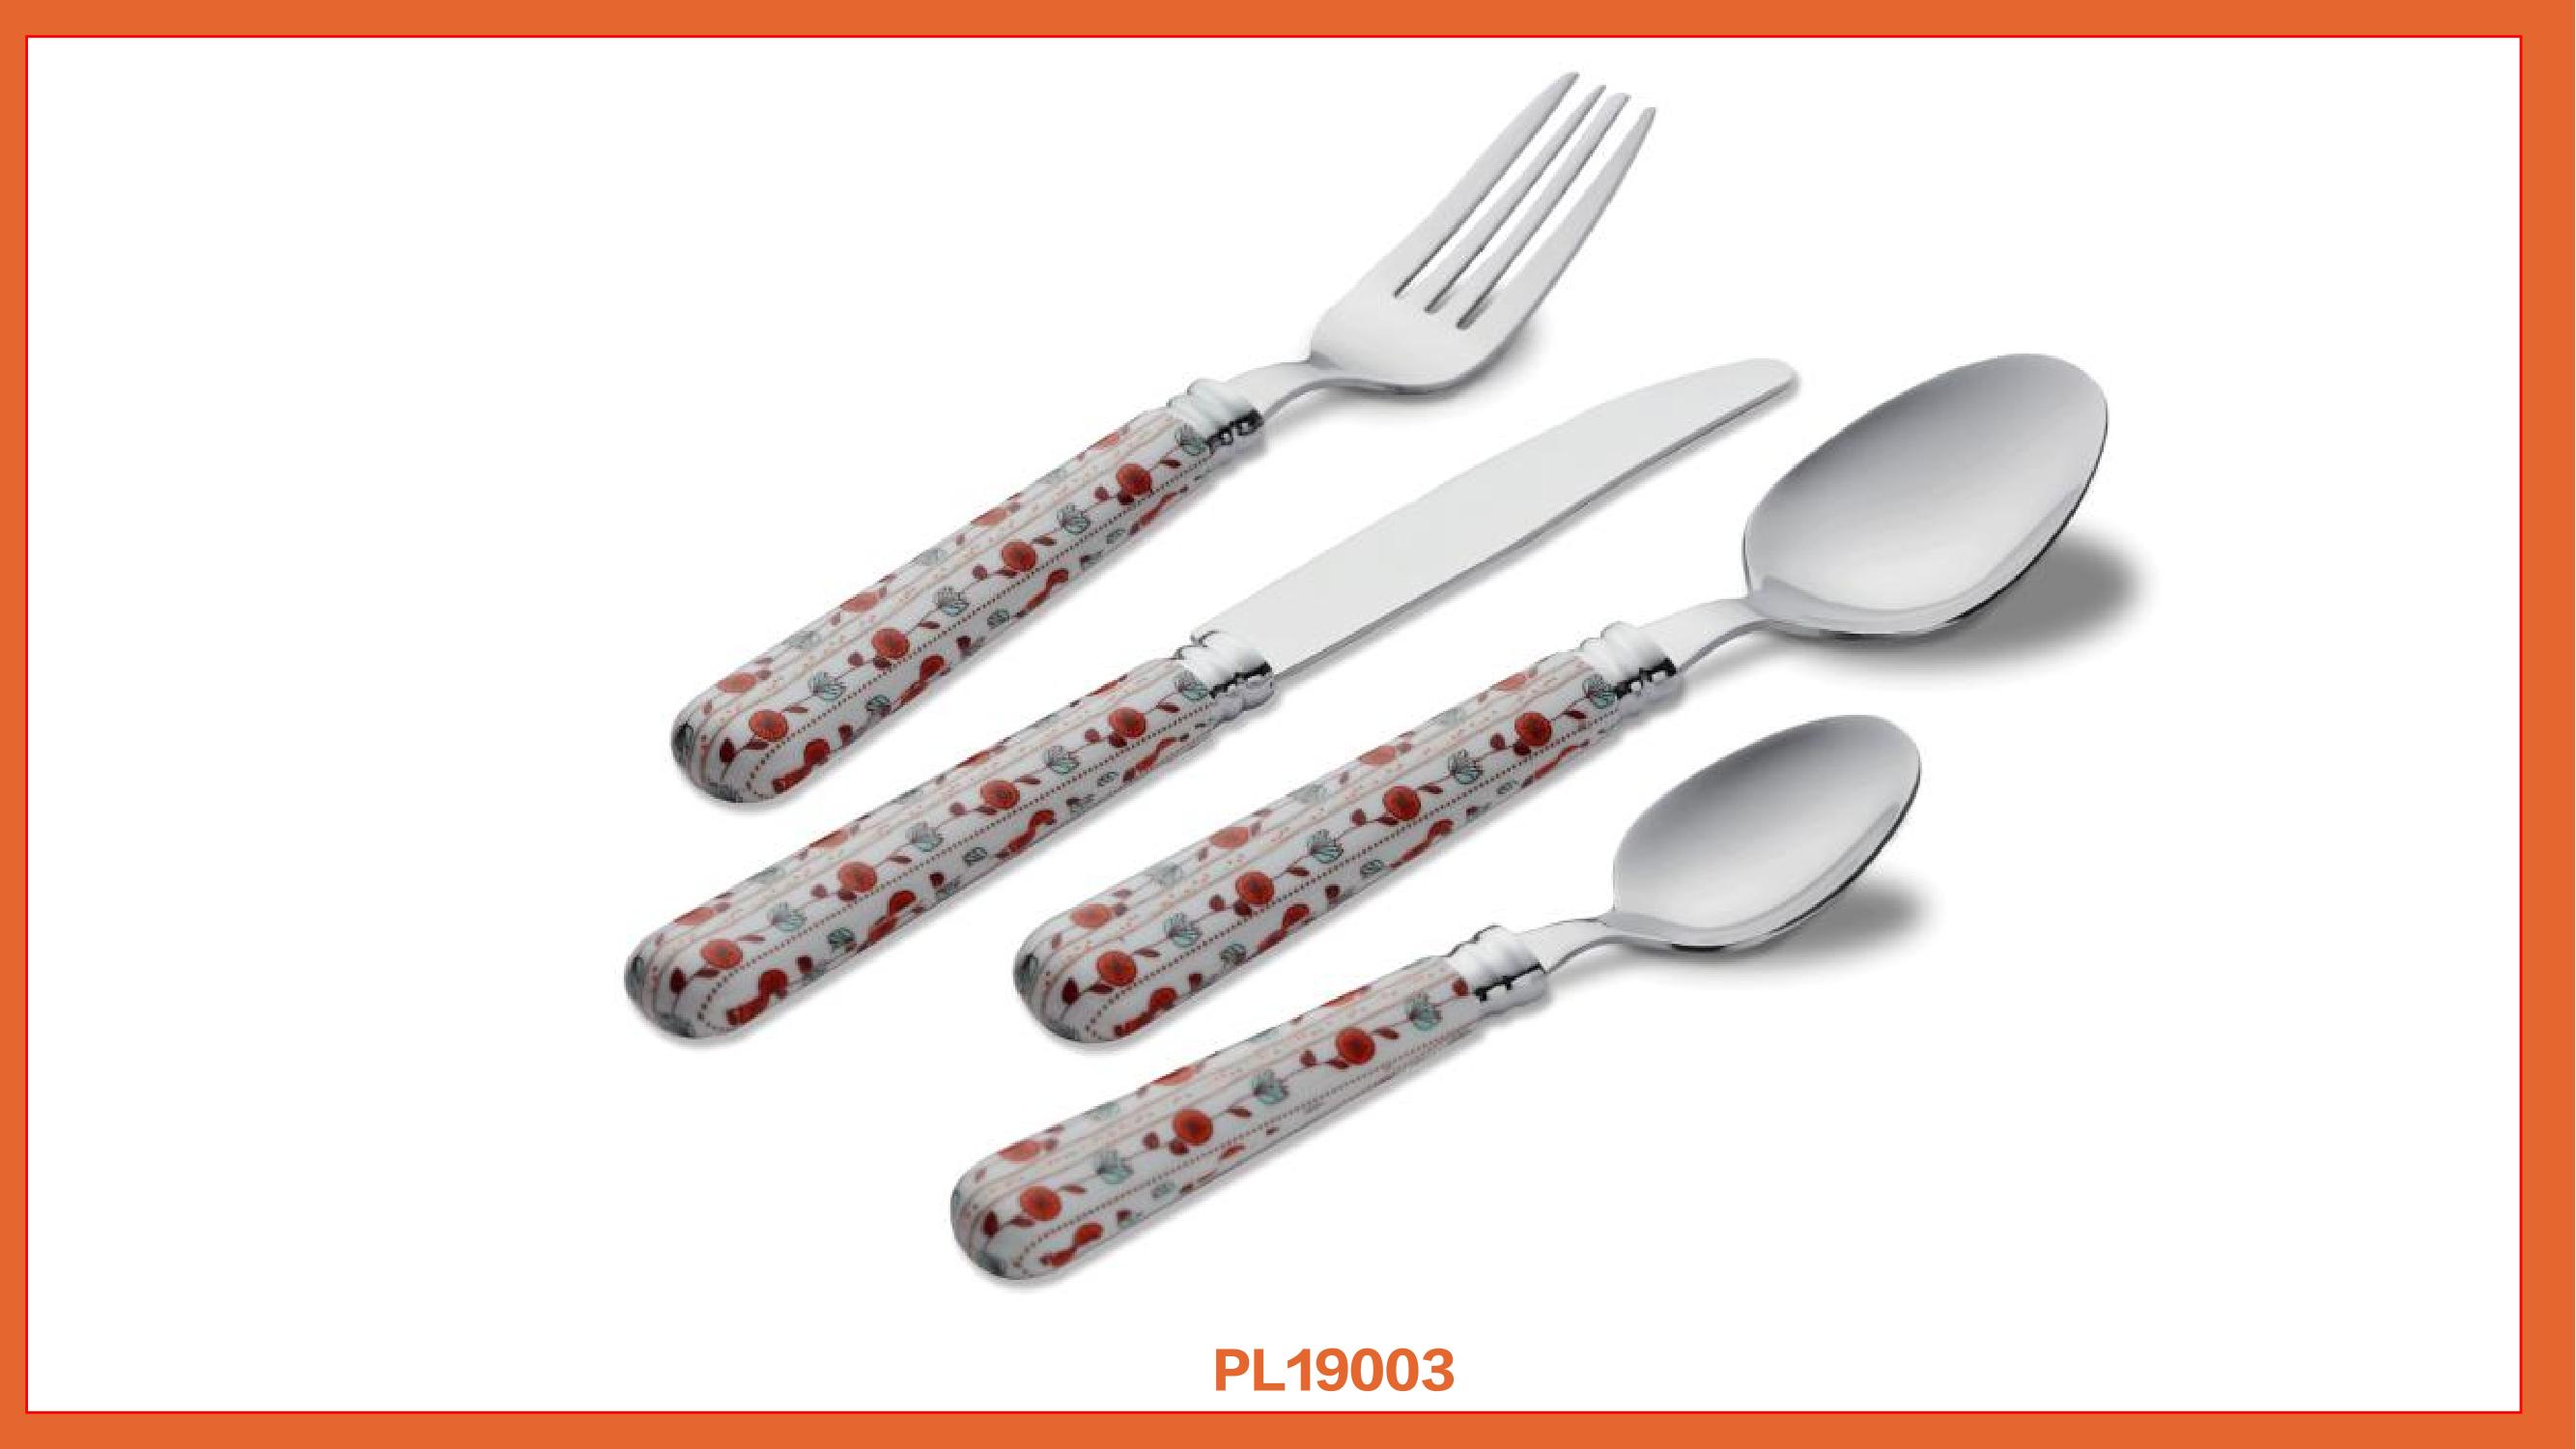 catalogue of plastic handle cutlery_7.jpg